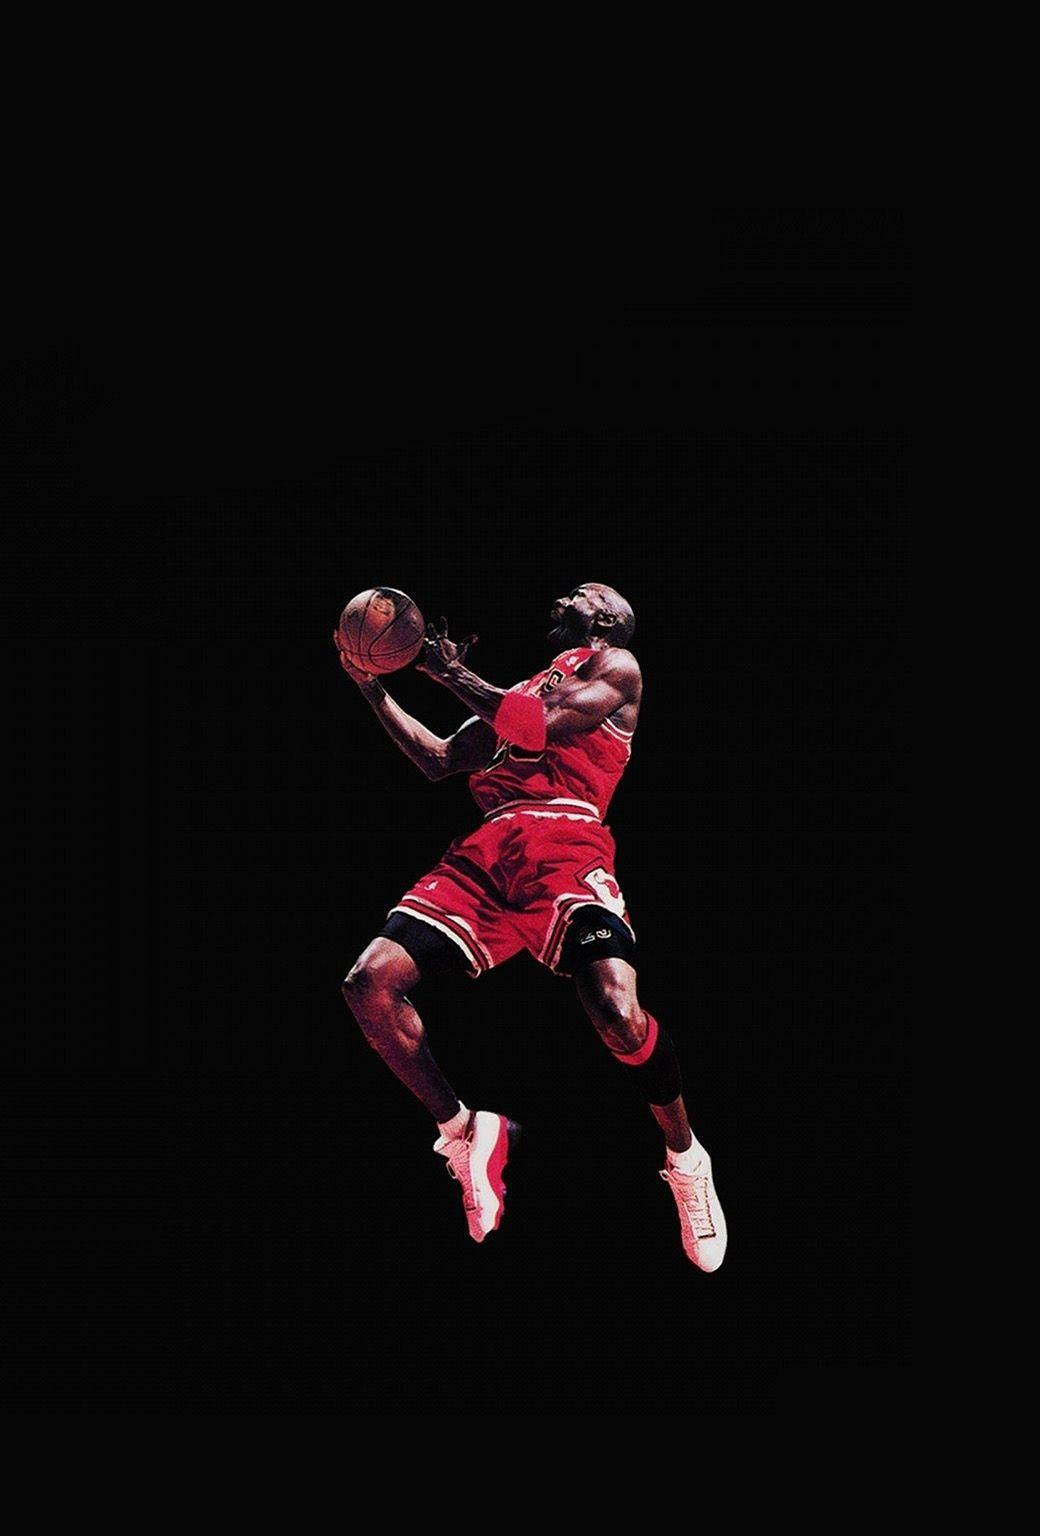 Michael Jordan Nike Iphone Background